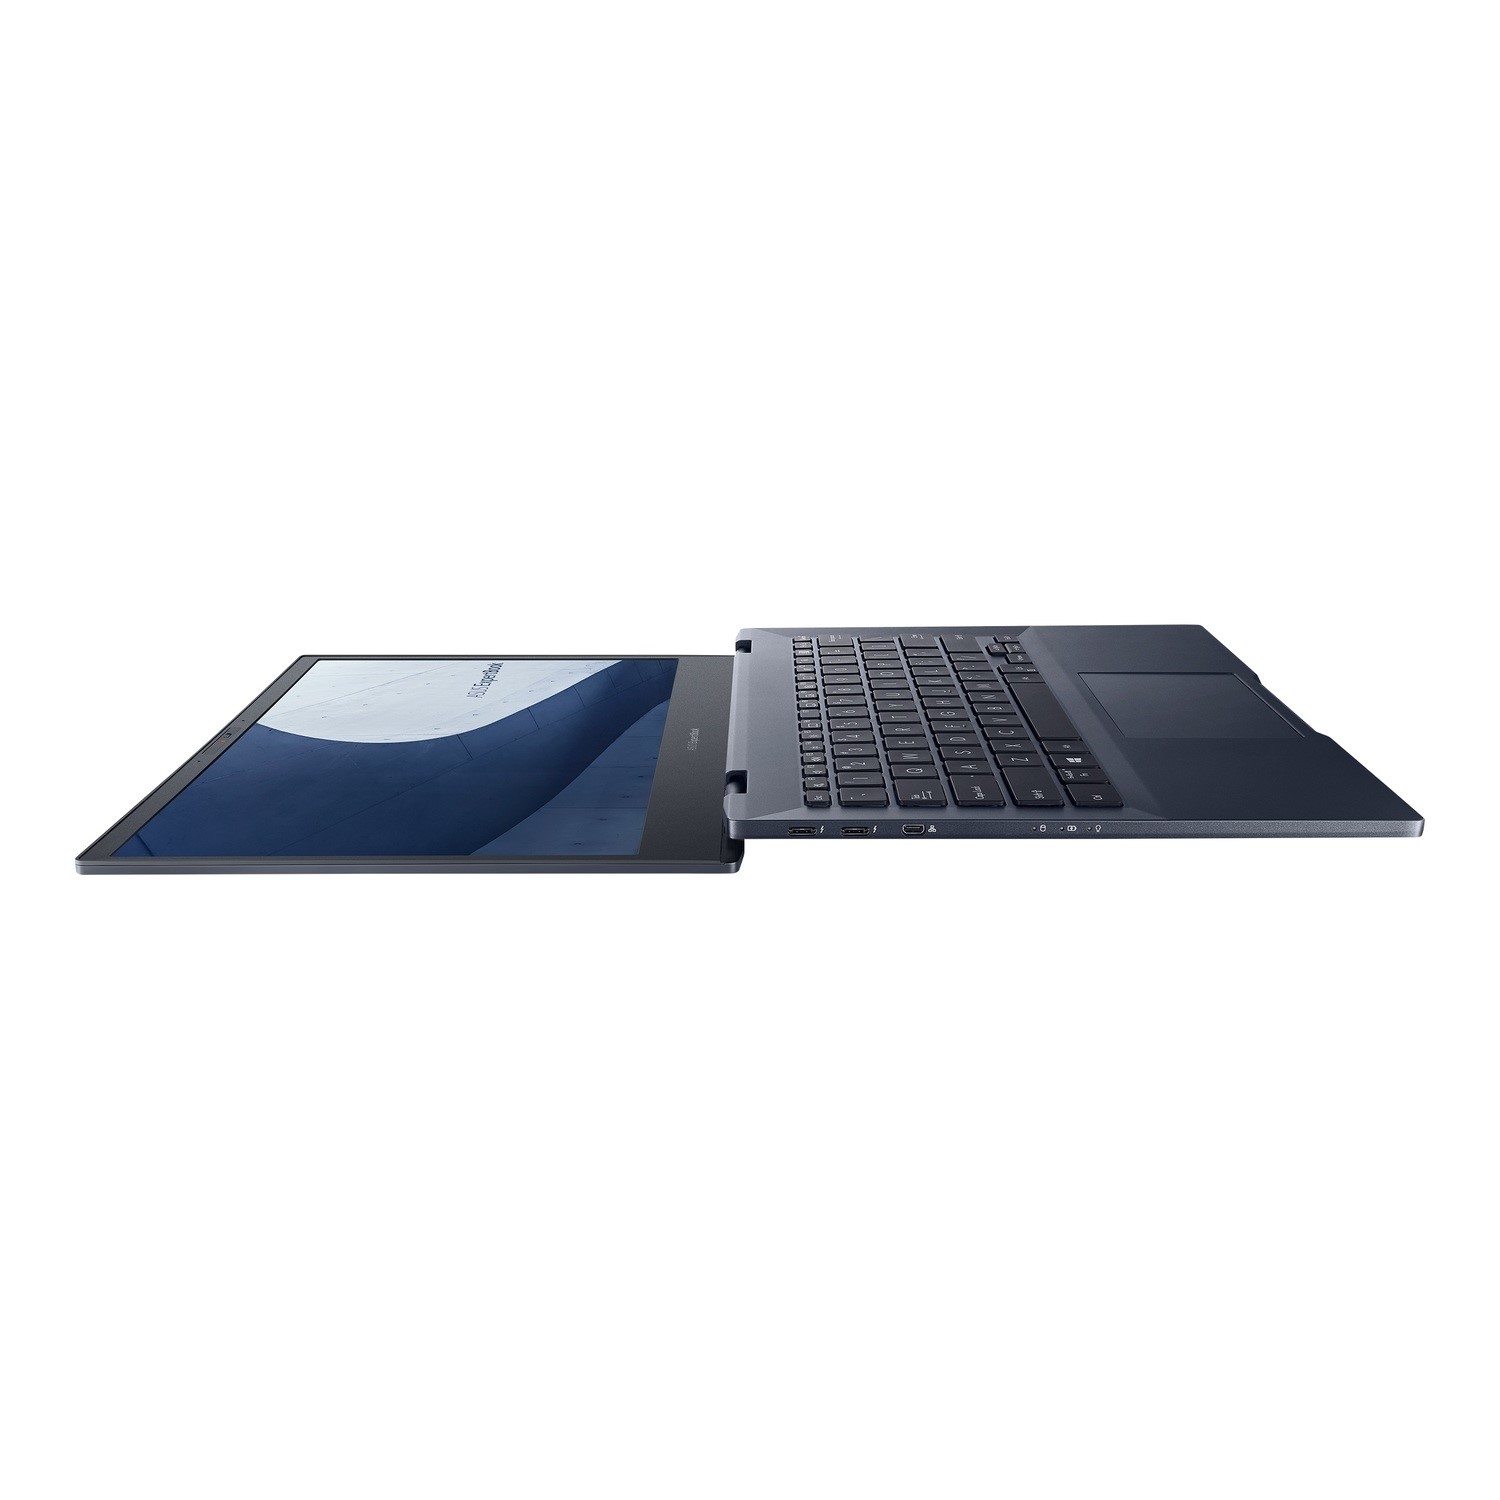 SAMSUNG Galaxy Book Pro 13.3 Laptop - Intel Core i5 - 8GB Memory - 256GB  SSD - Mystic Navy